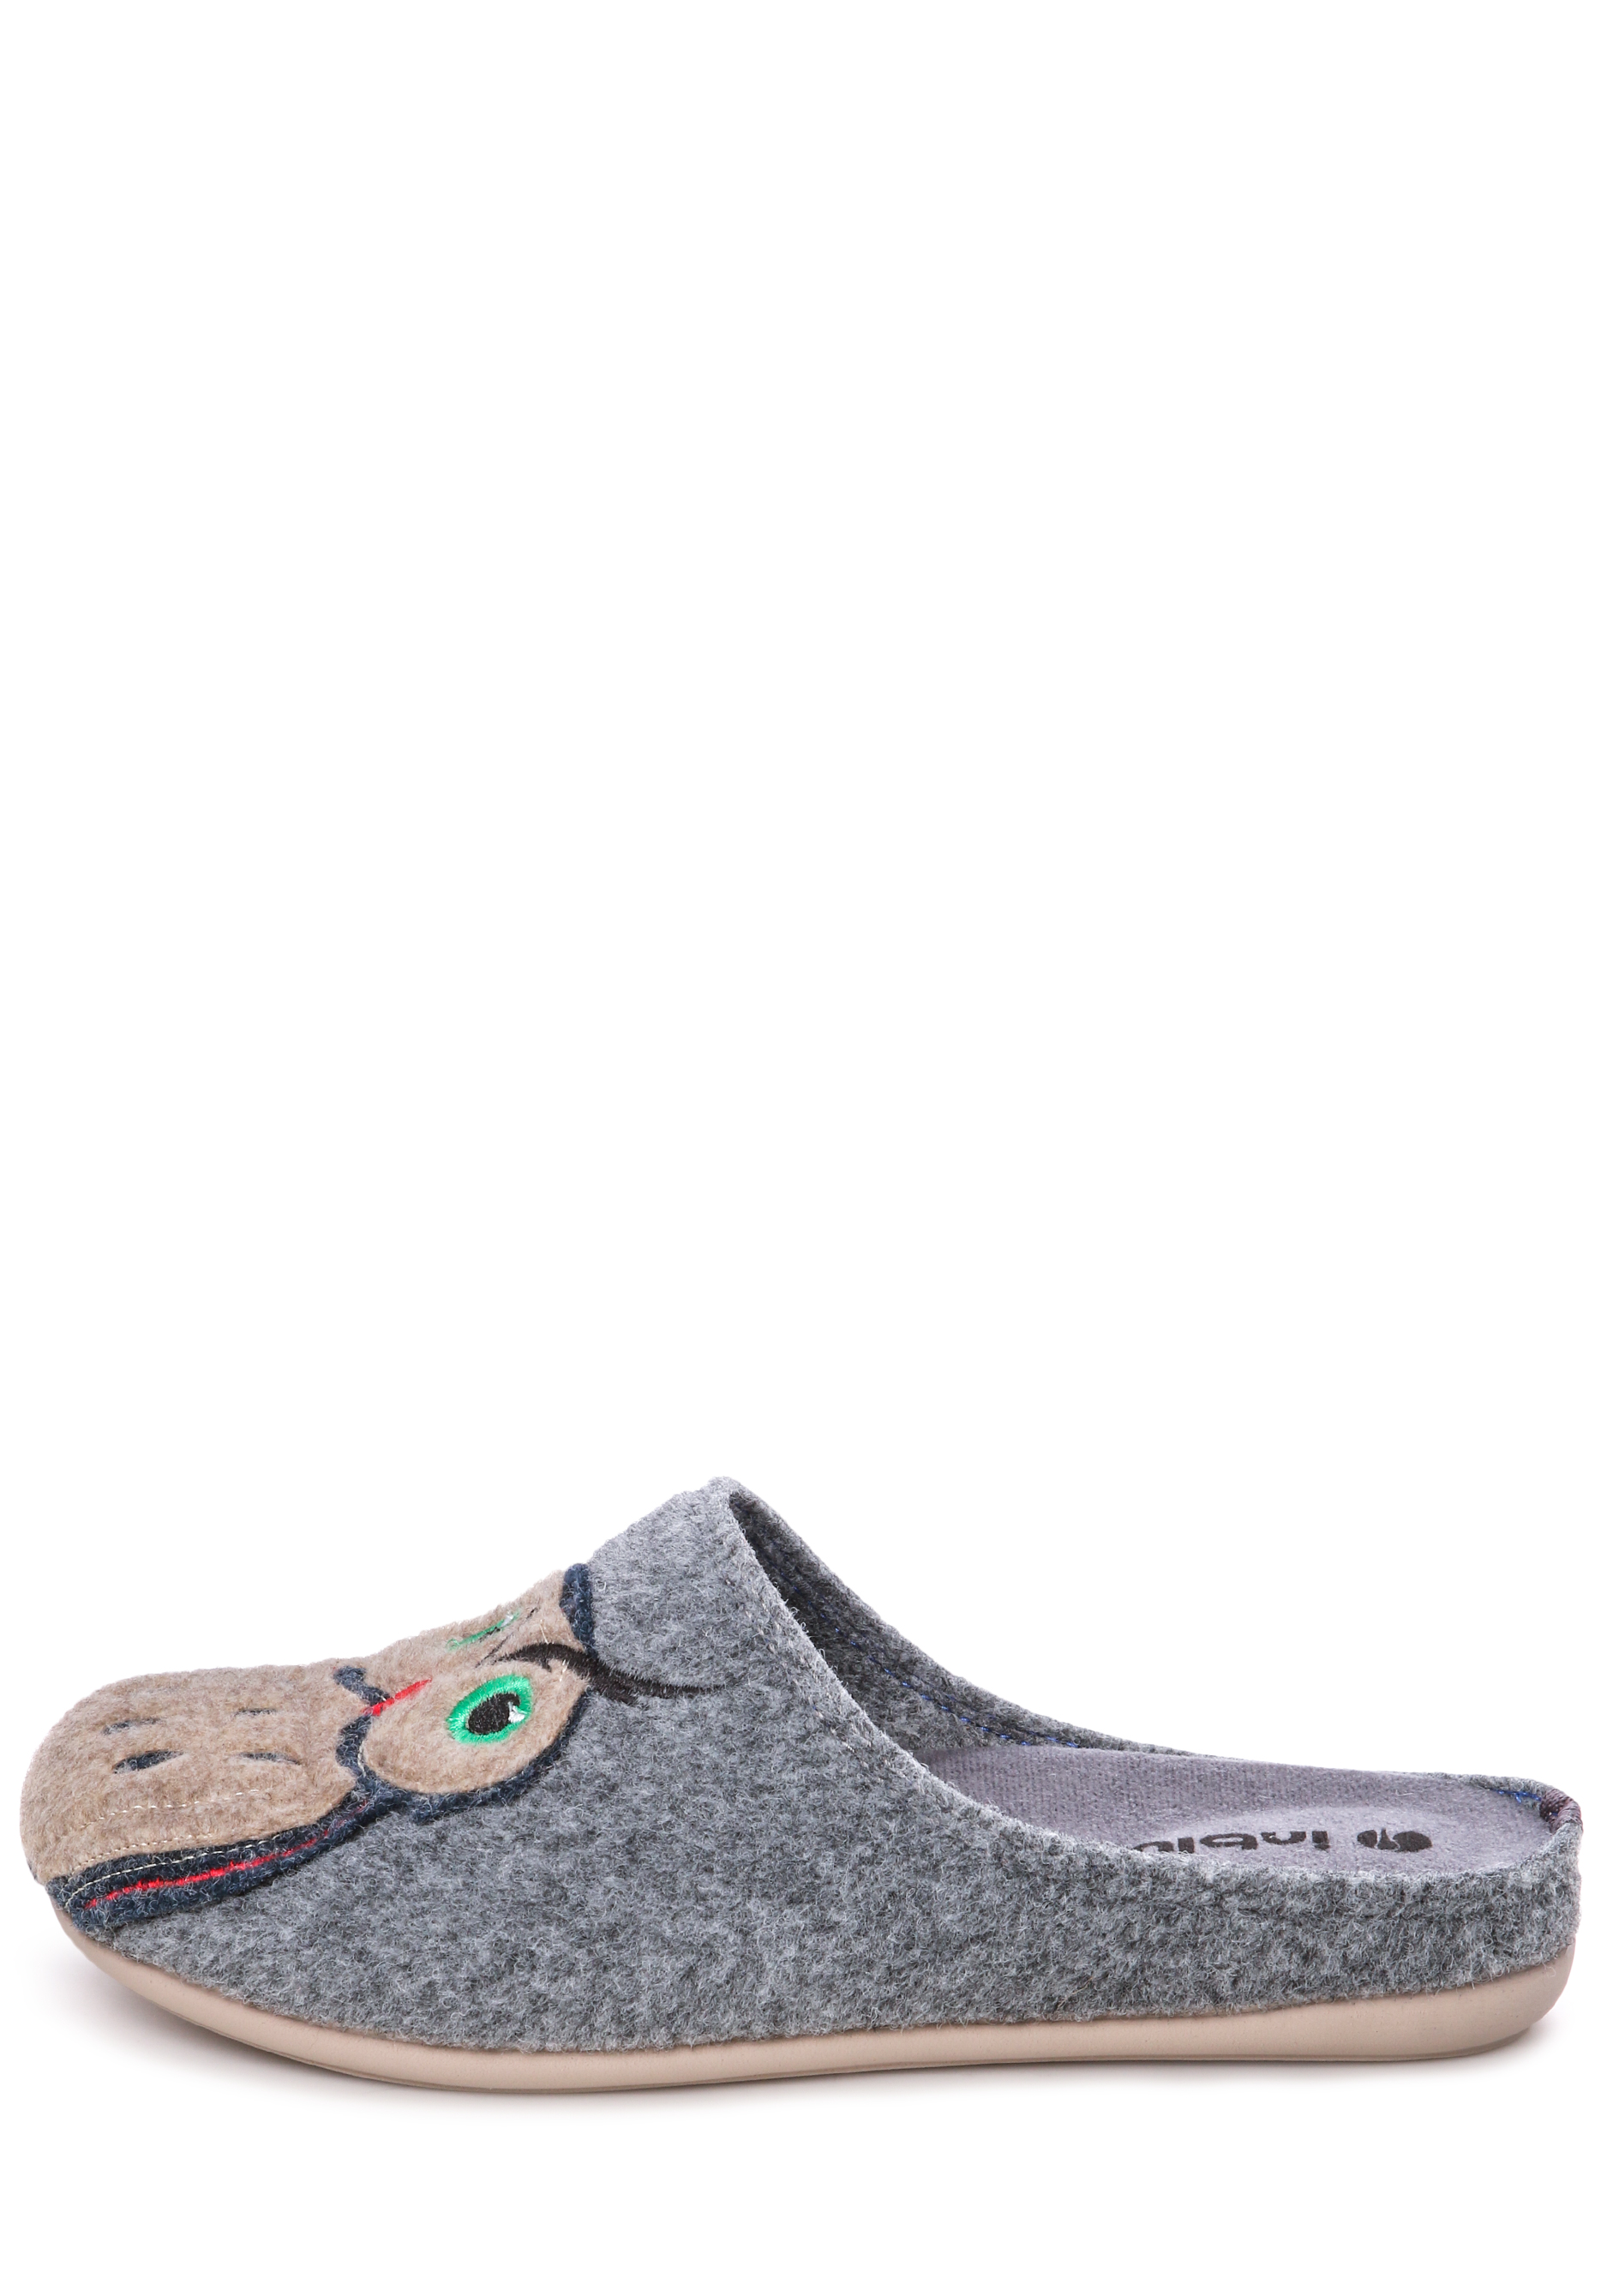 Тапочки женские "Дакота" Inblu, размер 35, цвет серый - фото 2